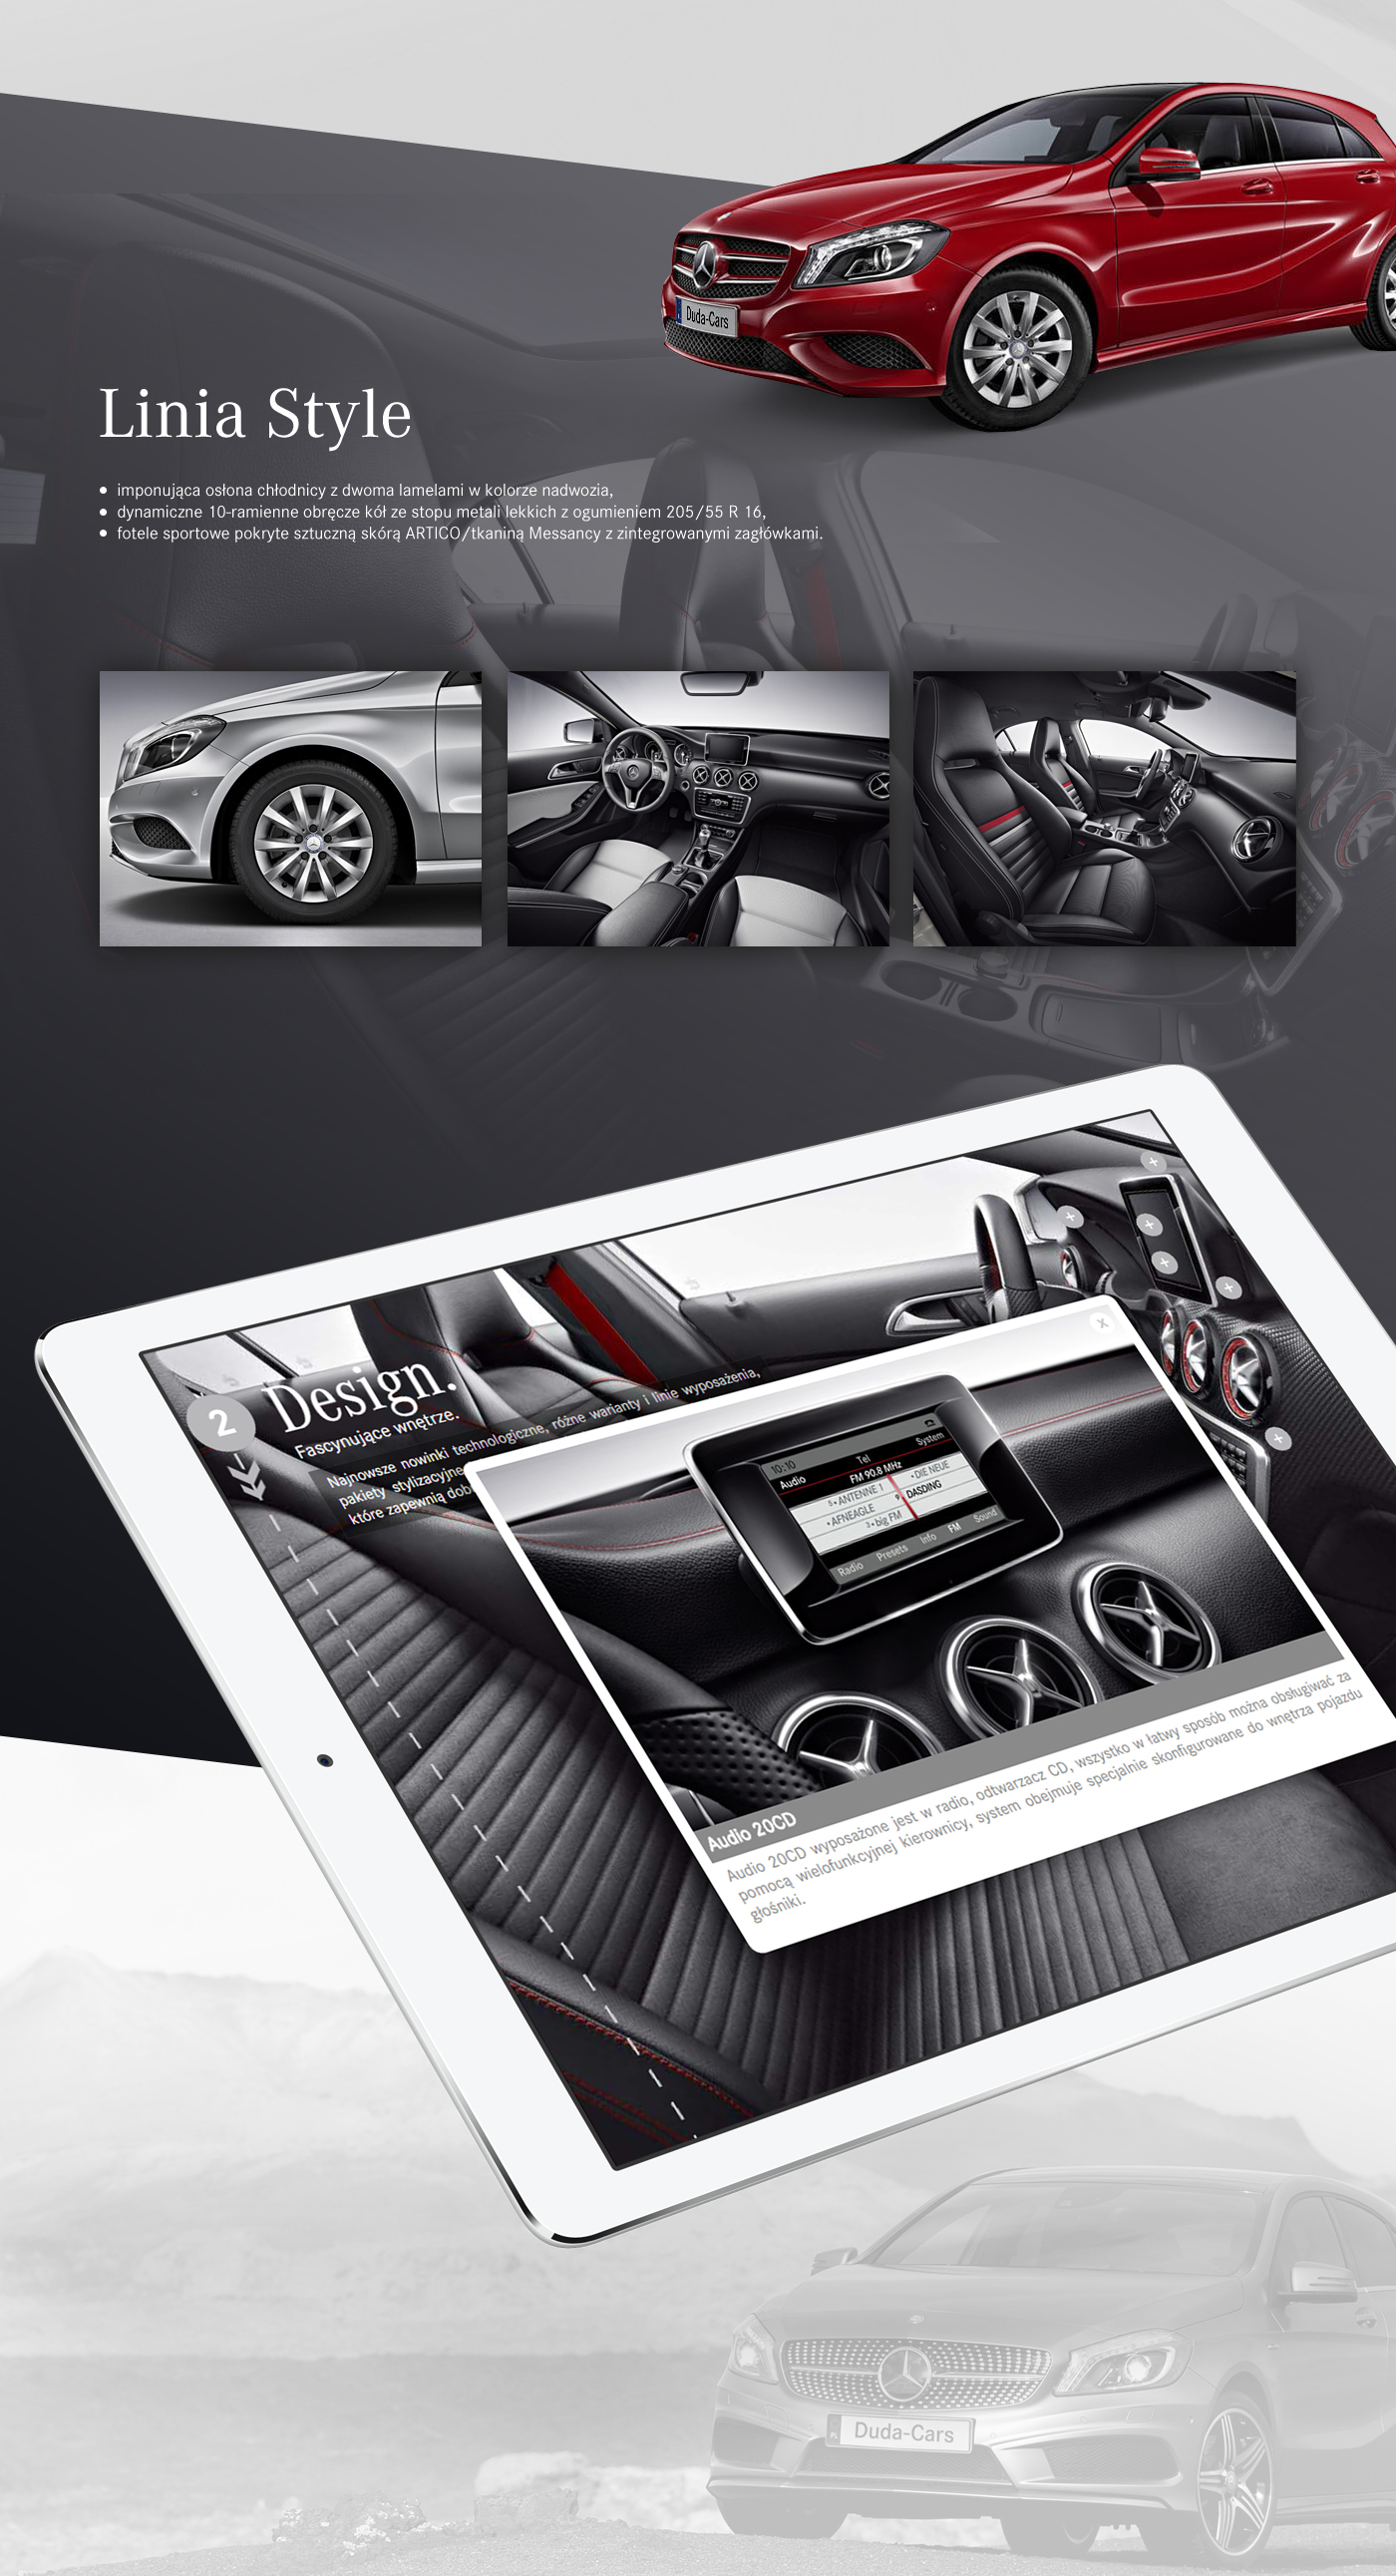 ux UI Webdesign onepage parallax Web design graphic mercedez Benz duda adstone poland poznan car